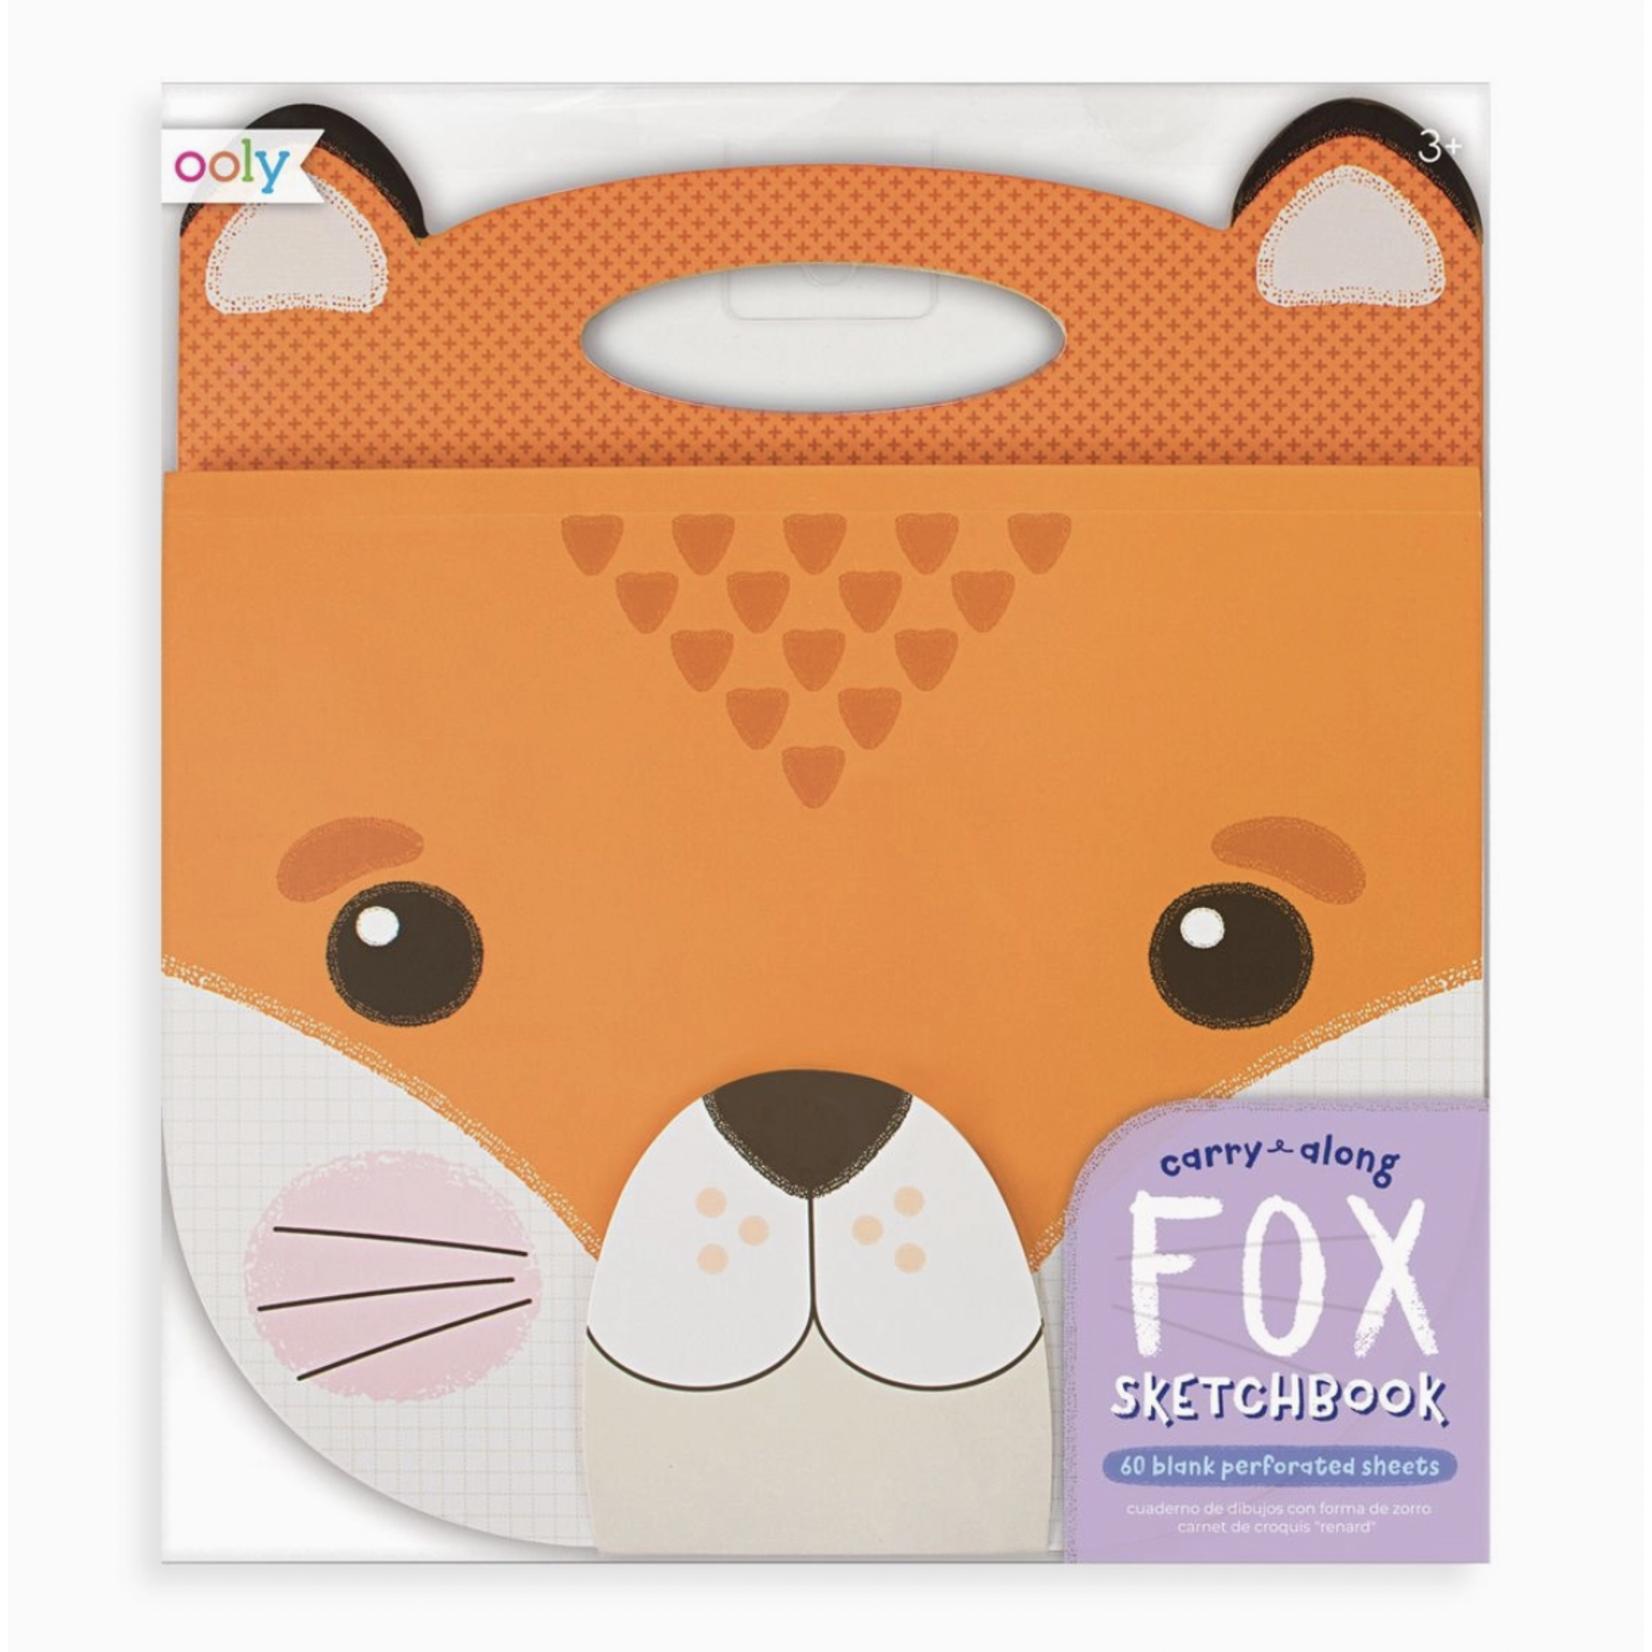 OOLY Carry Along Sketchbook - Fox